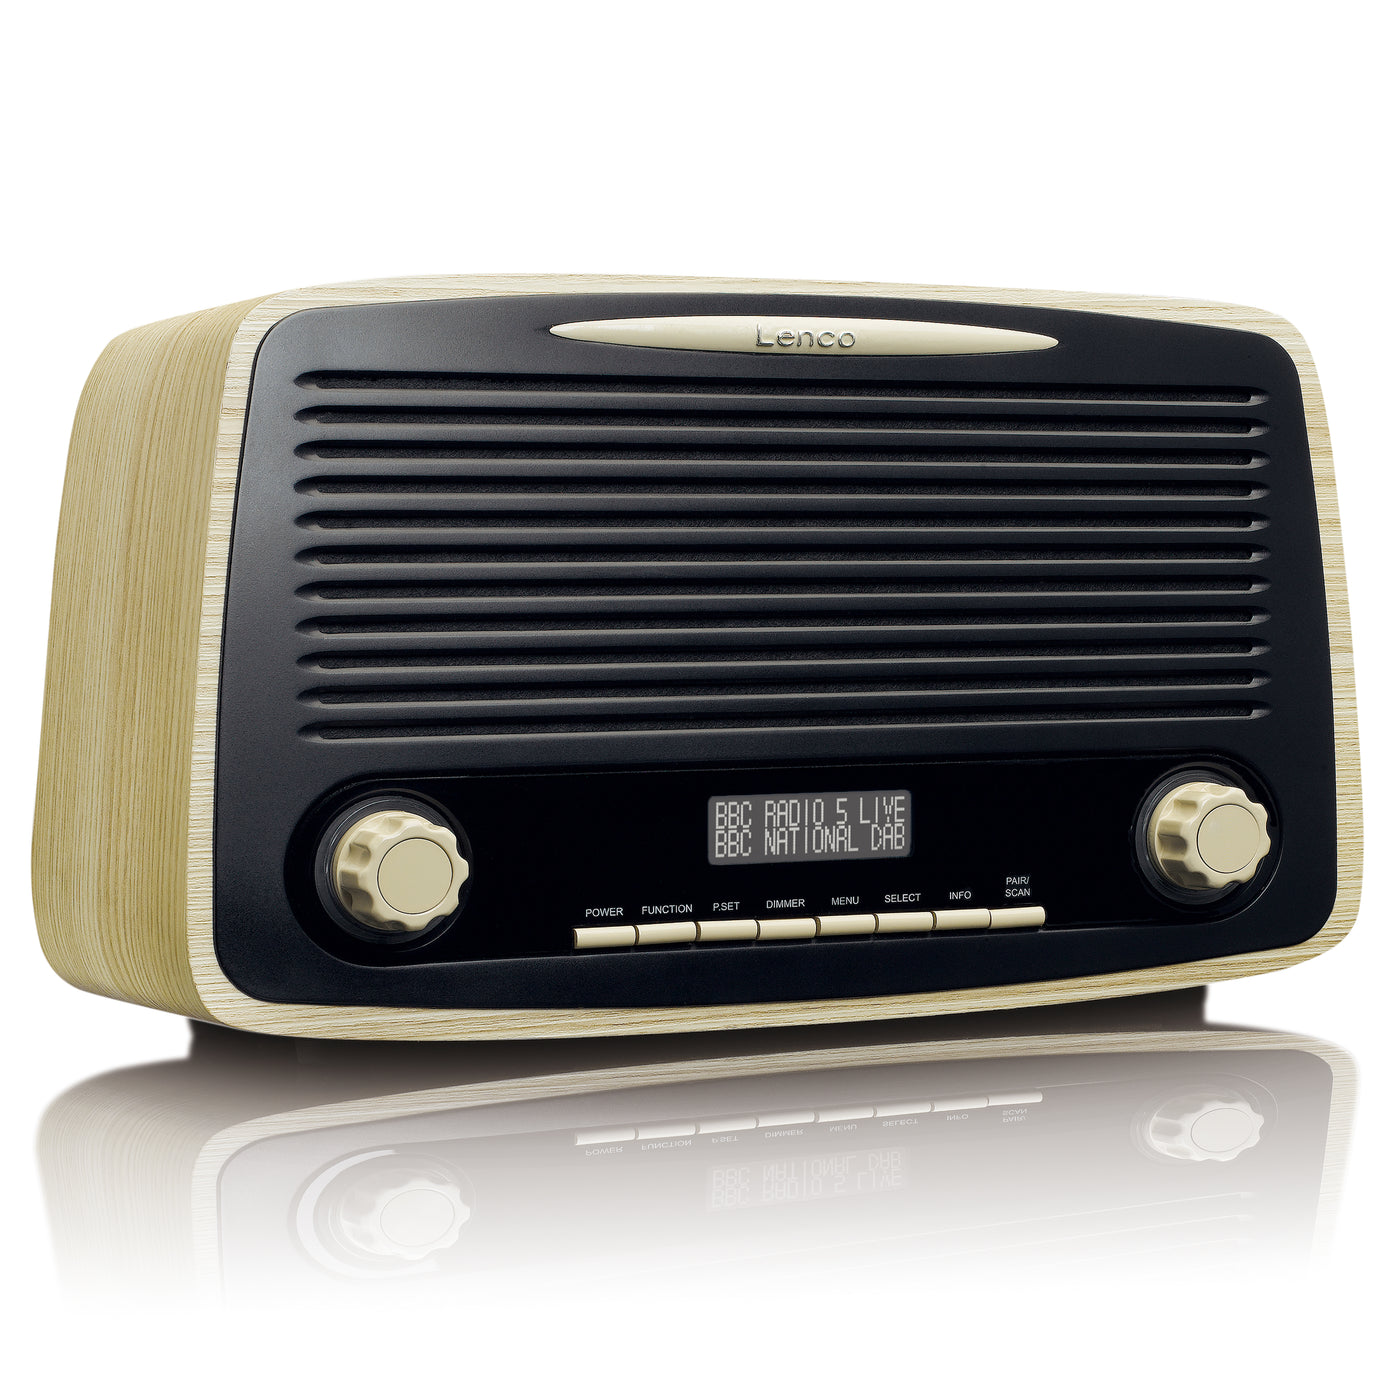 LENCO DAR-012WD - DAB+ FM Radio with Bluetooth®, AUX input and Alarm Function - Wood